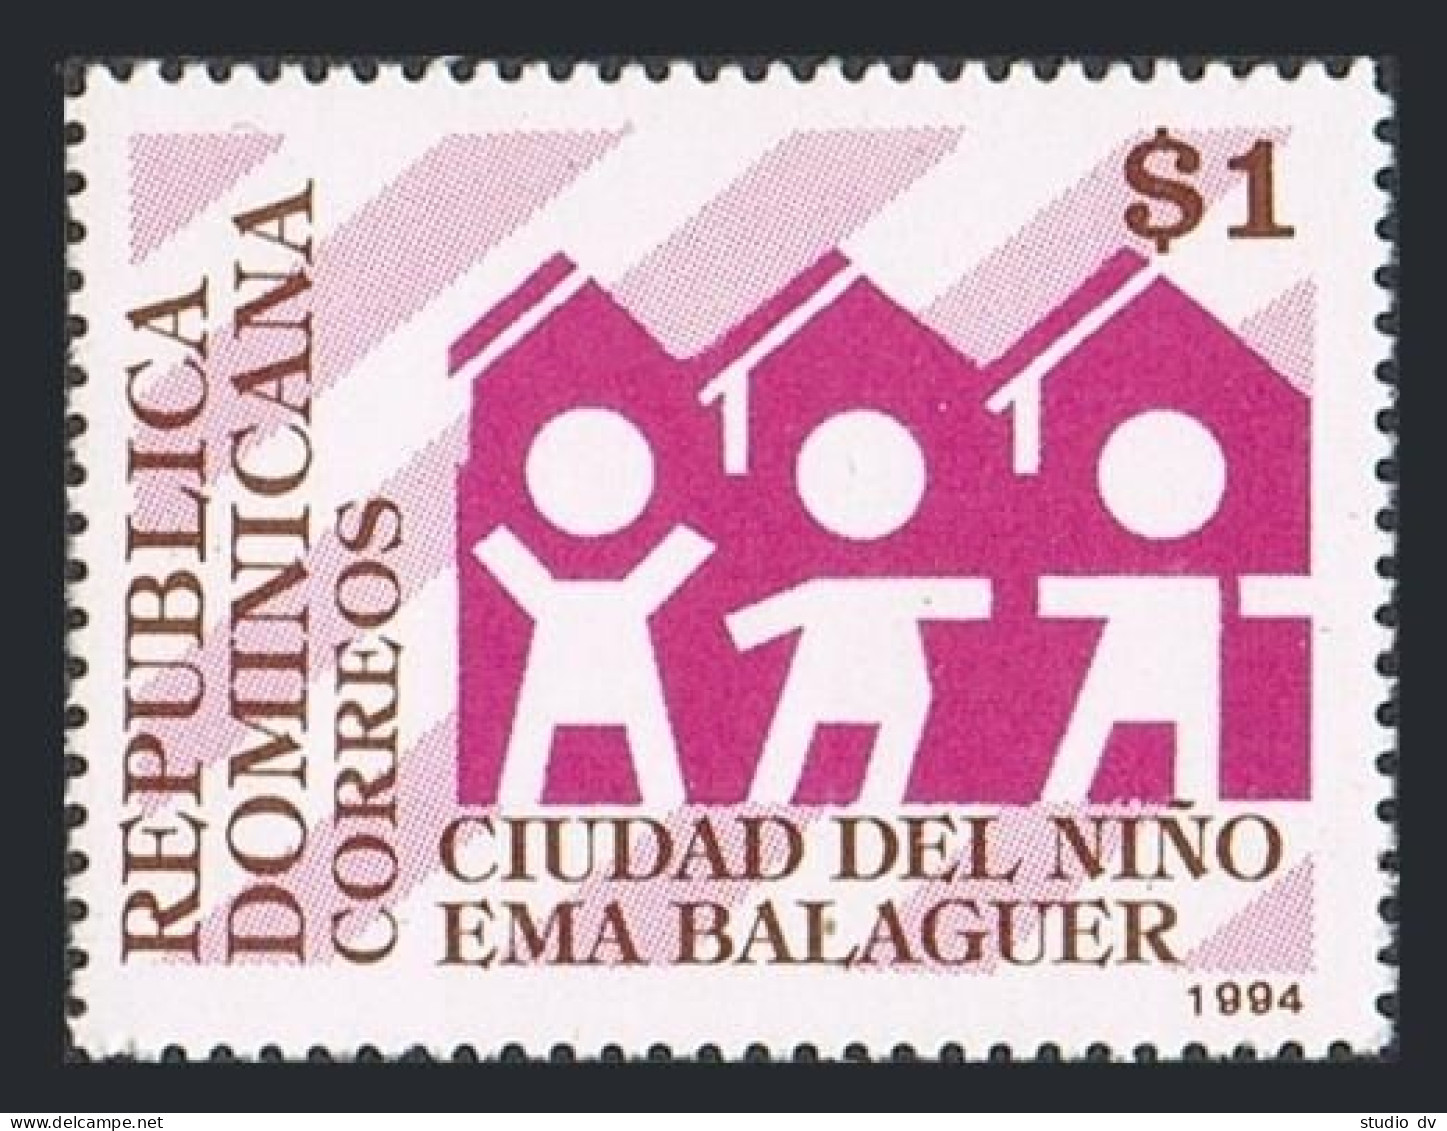 Dominican Rep 1165,MNH.Michel 1708. Ema Balaguer City Of Children,1994. - Dominique (1978-...)